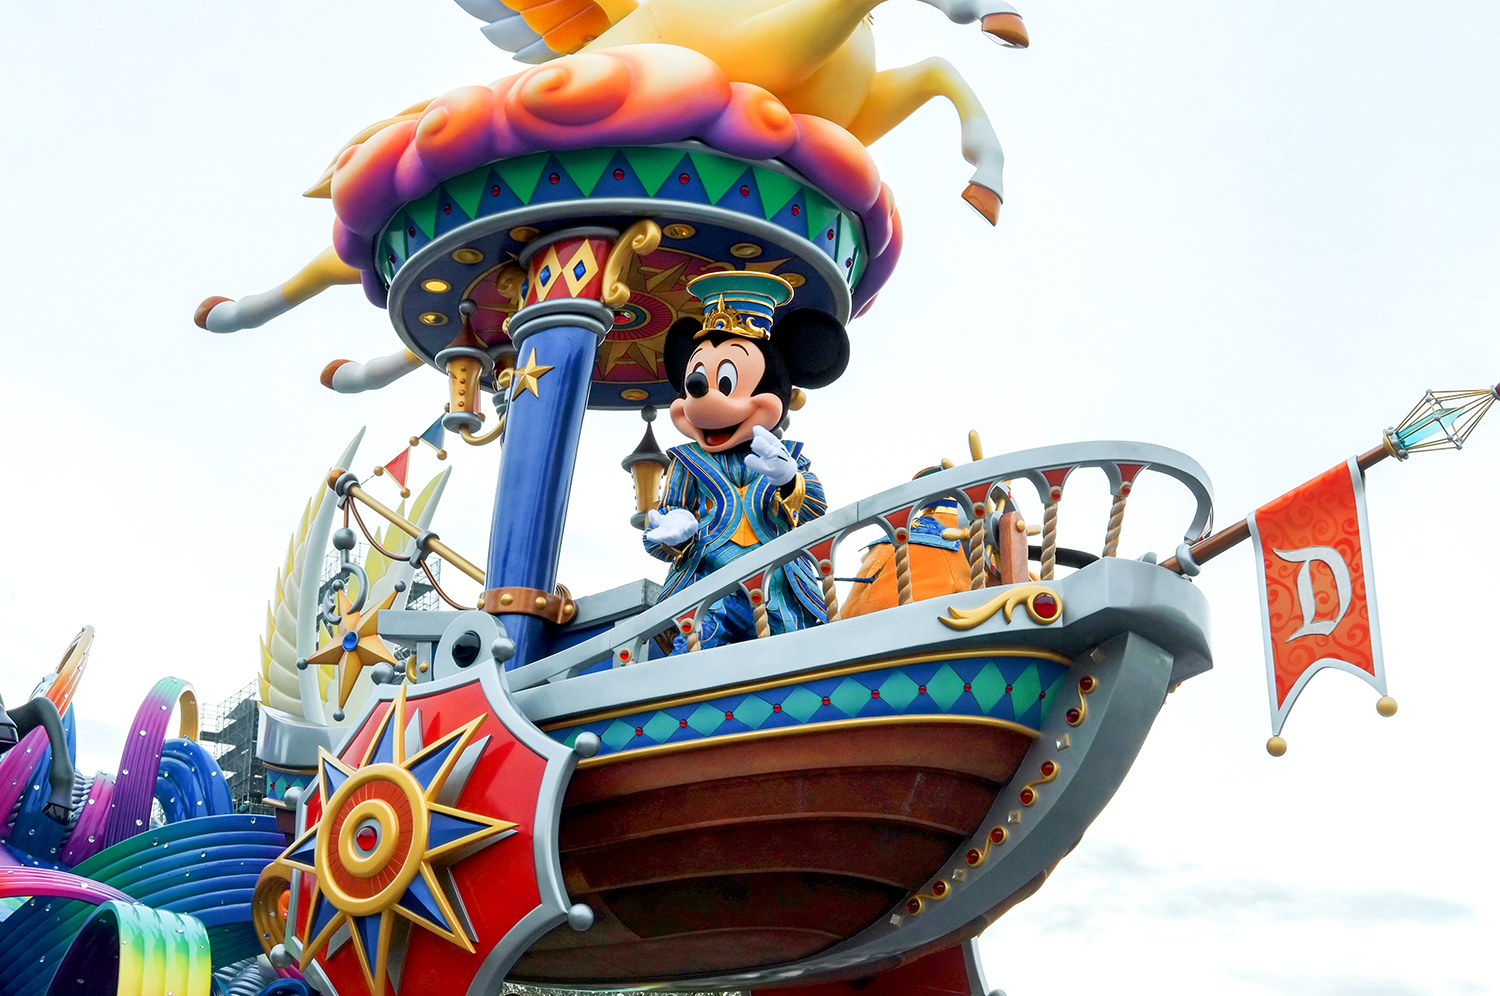 Japan Autumn 2019: Tokyo Disneyland & DisneySea